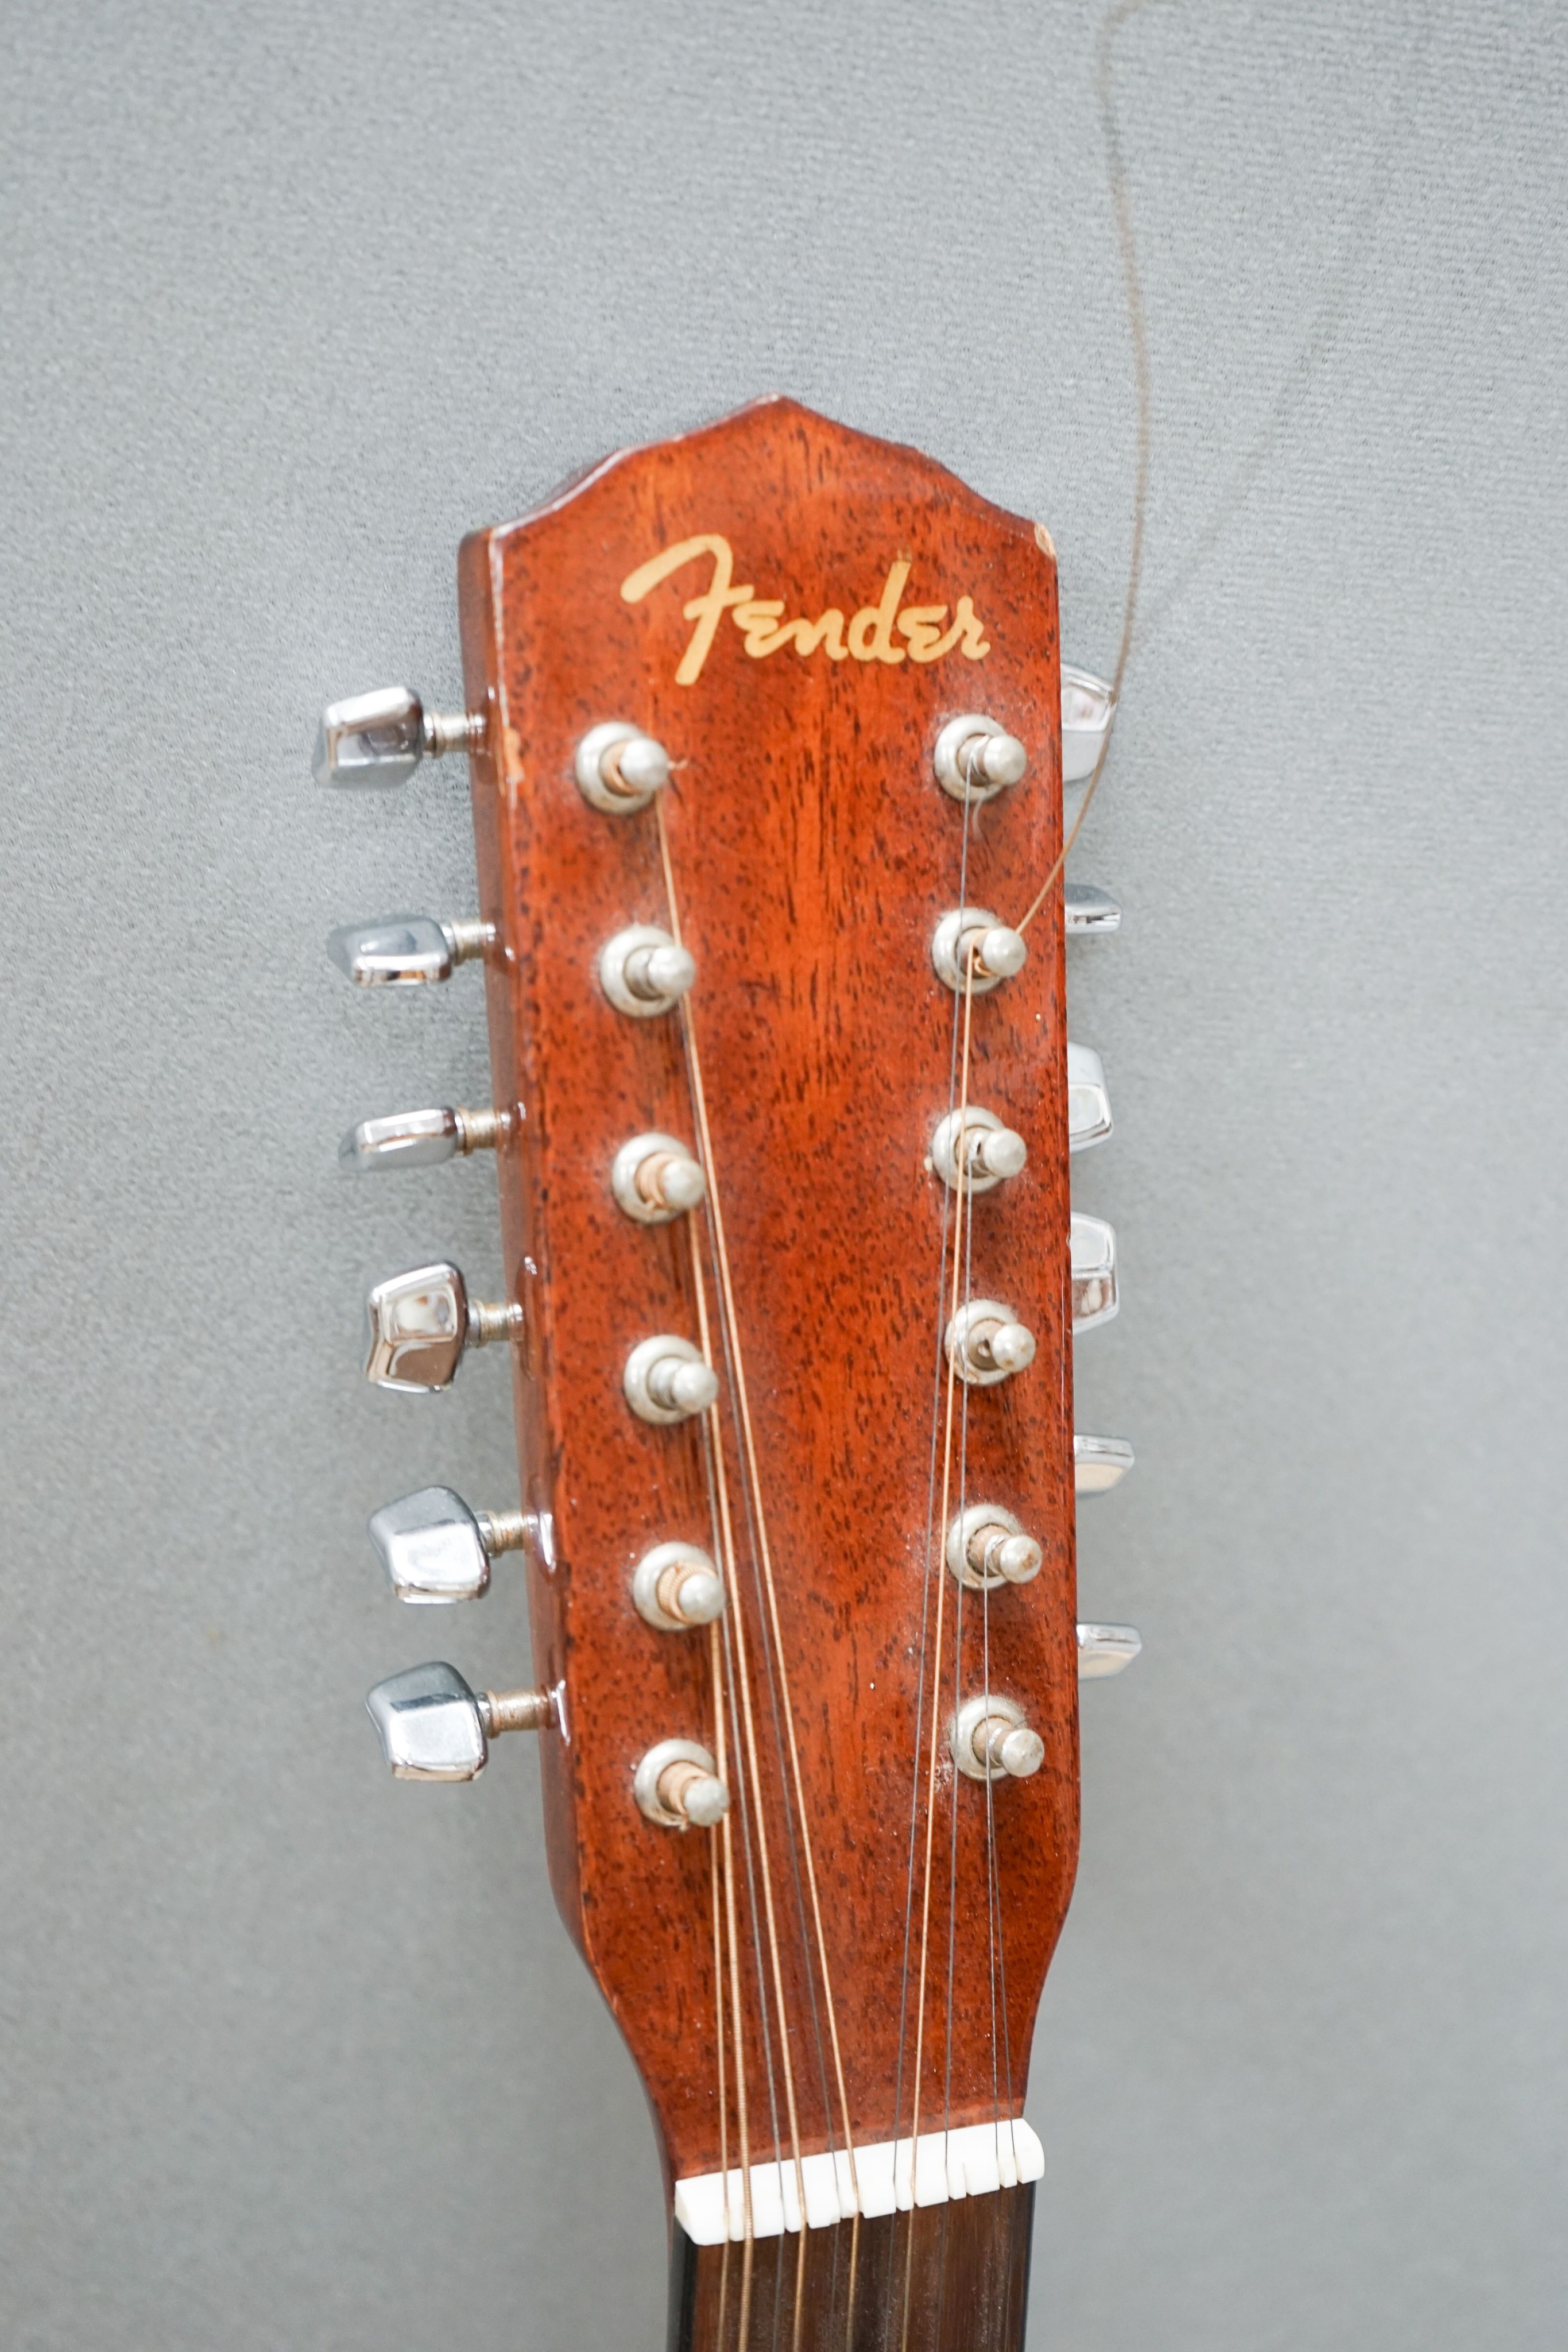 A Fender 12 string acoustic guitar DG 18 12 serial no: 90112437